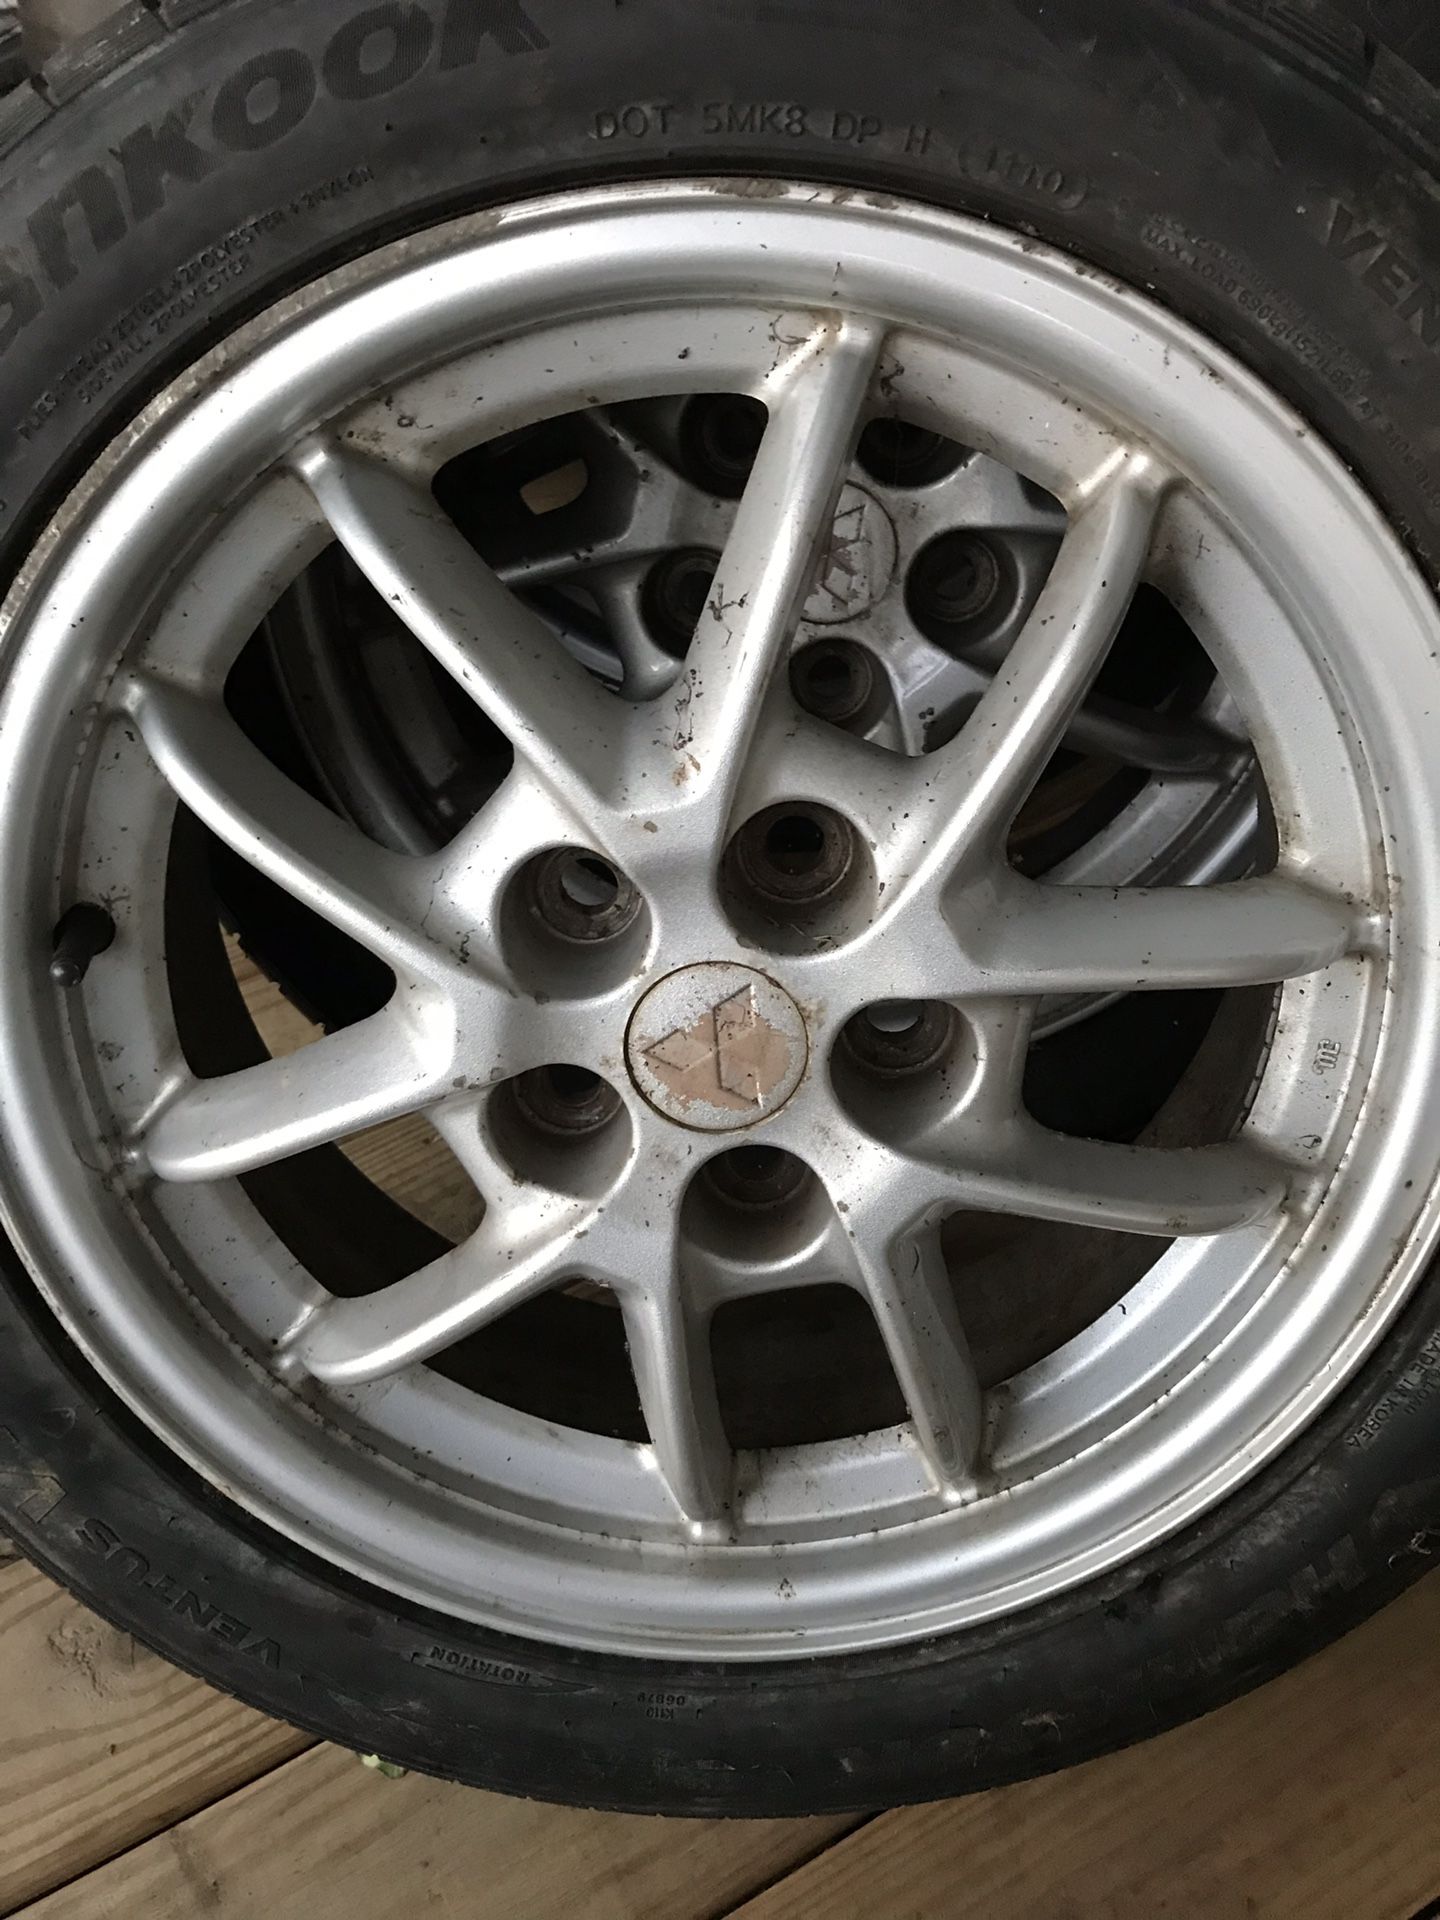 17” Mitsubishi eclipse rims and tires